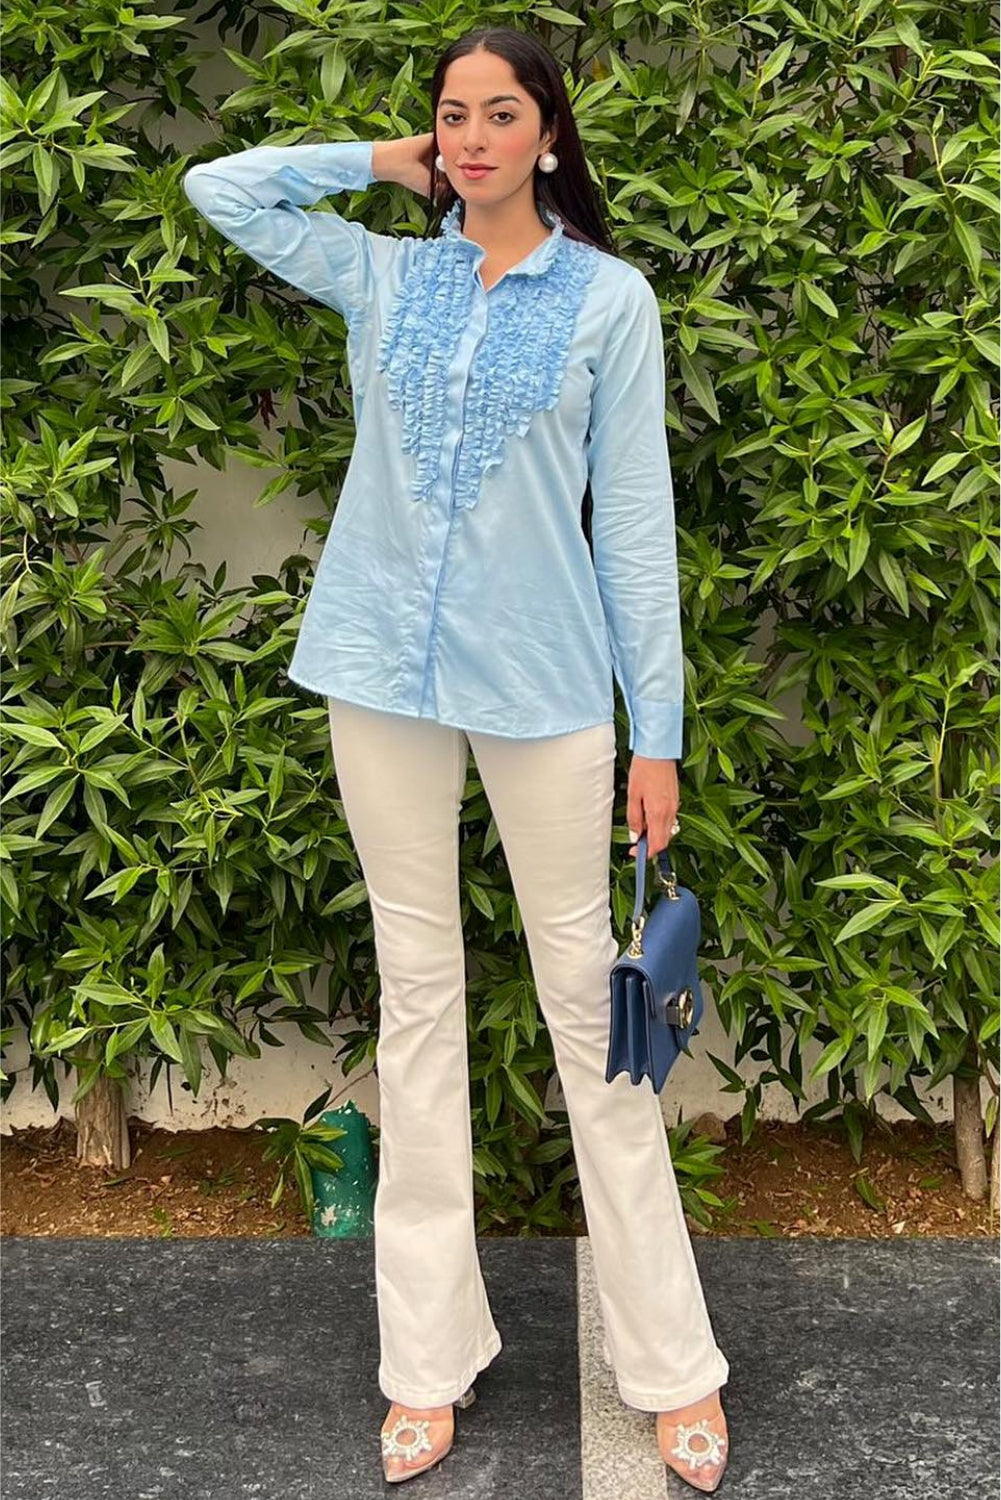 Jasnoor Anand In Powder Blue Cotton Frilled Shirt